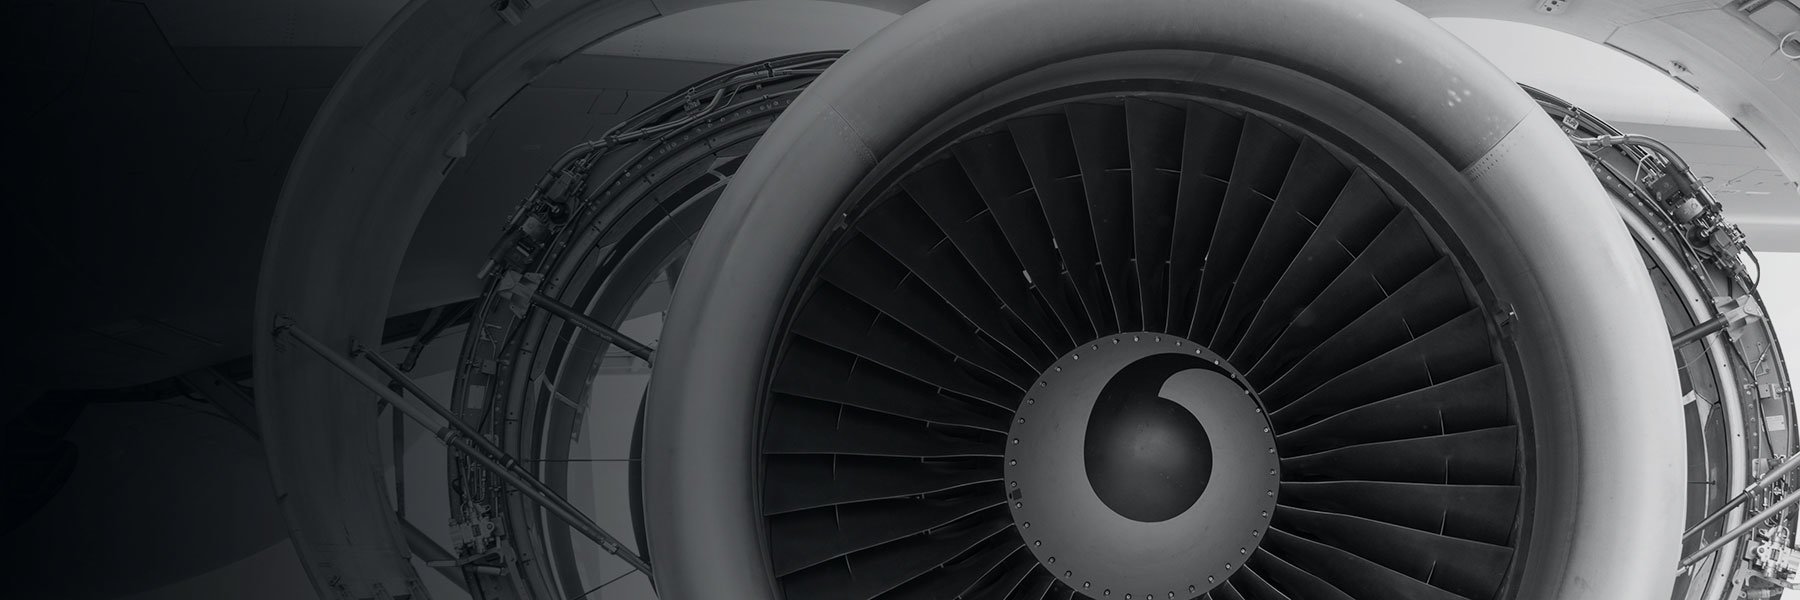 Aerospace Solutions image of engine